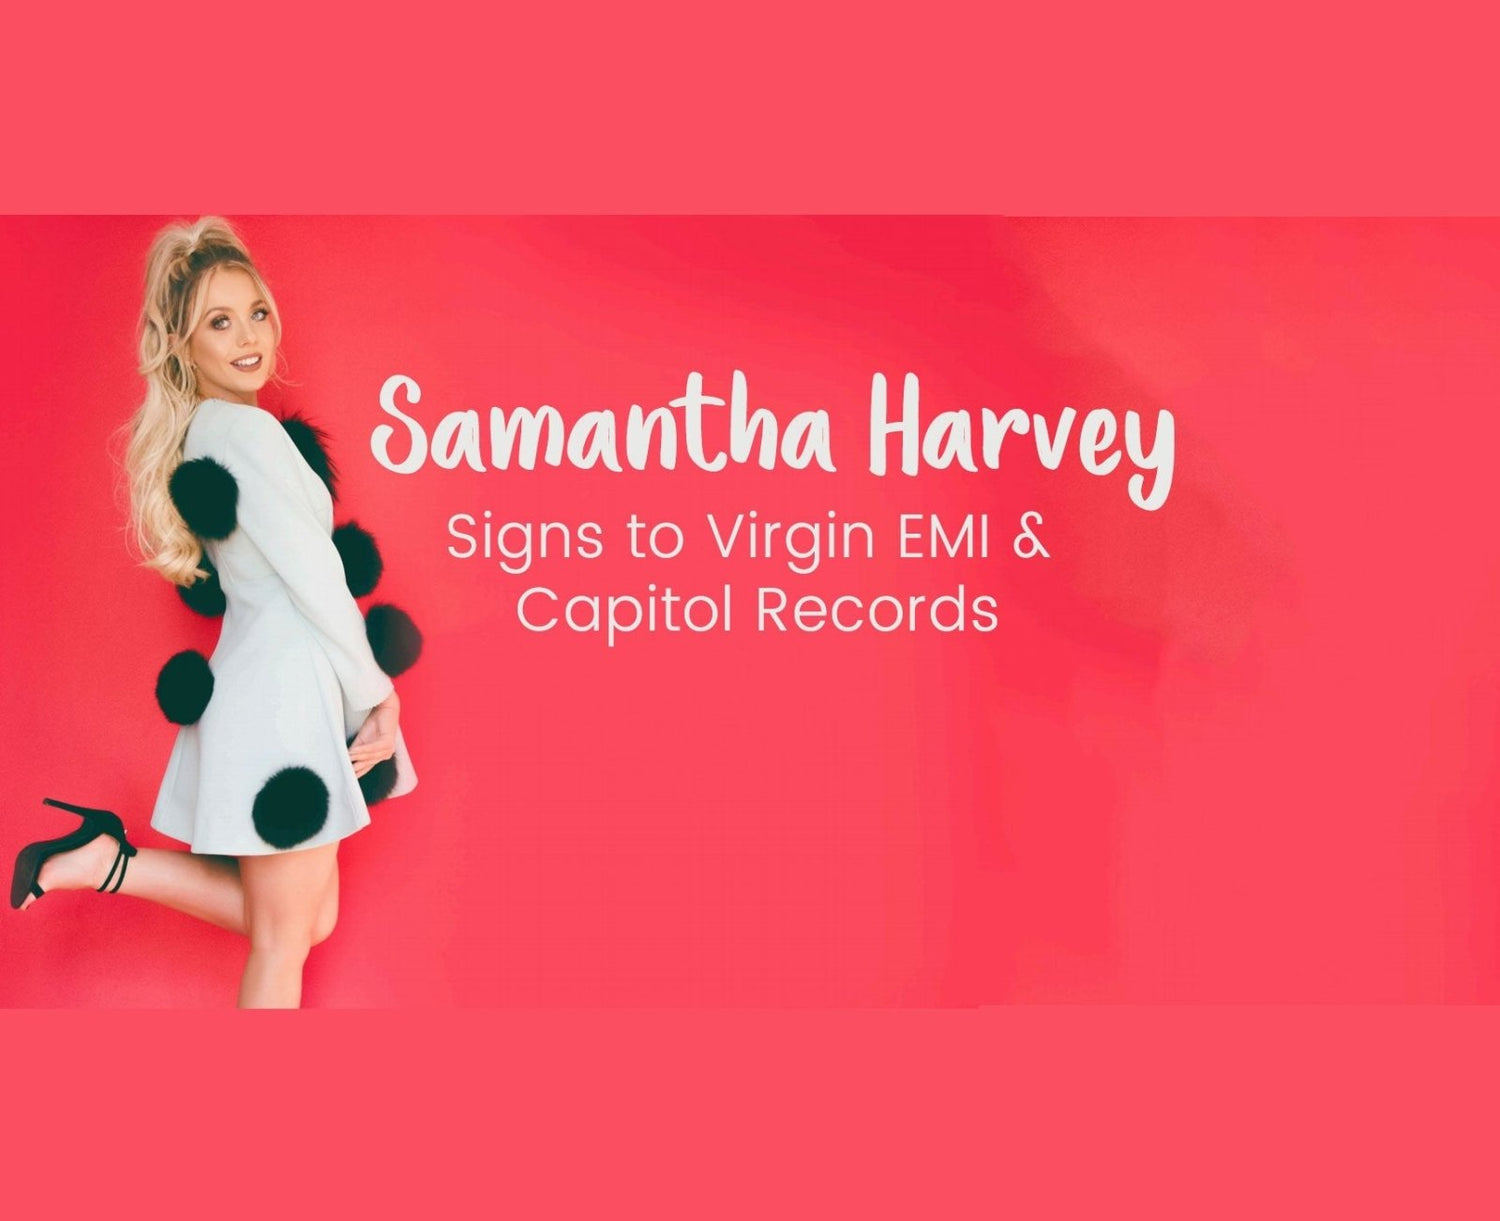 Samantha Harvey Signs Deal with Virgin EMI & Capitol (Well done Samantha!) - Editors Keys